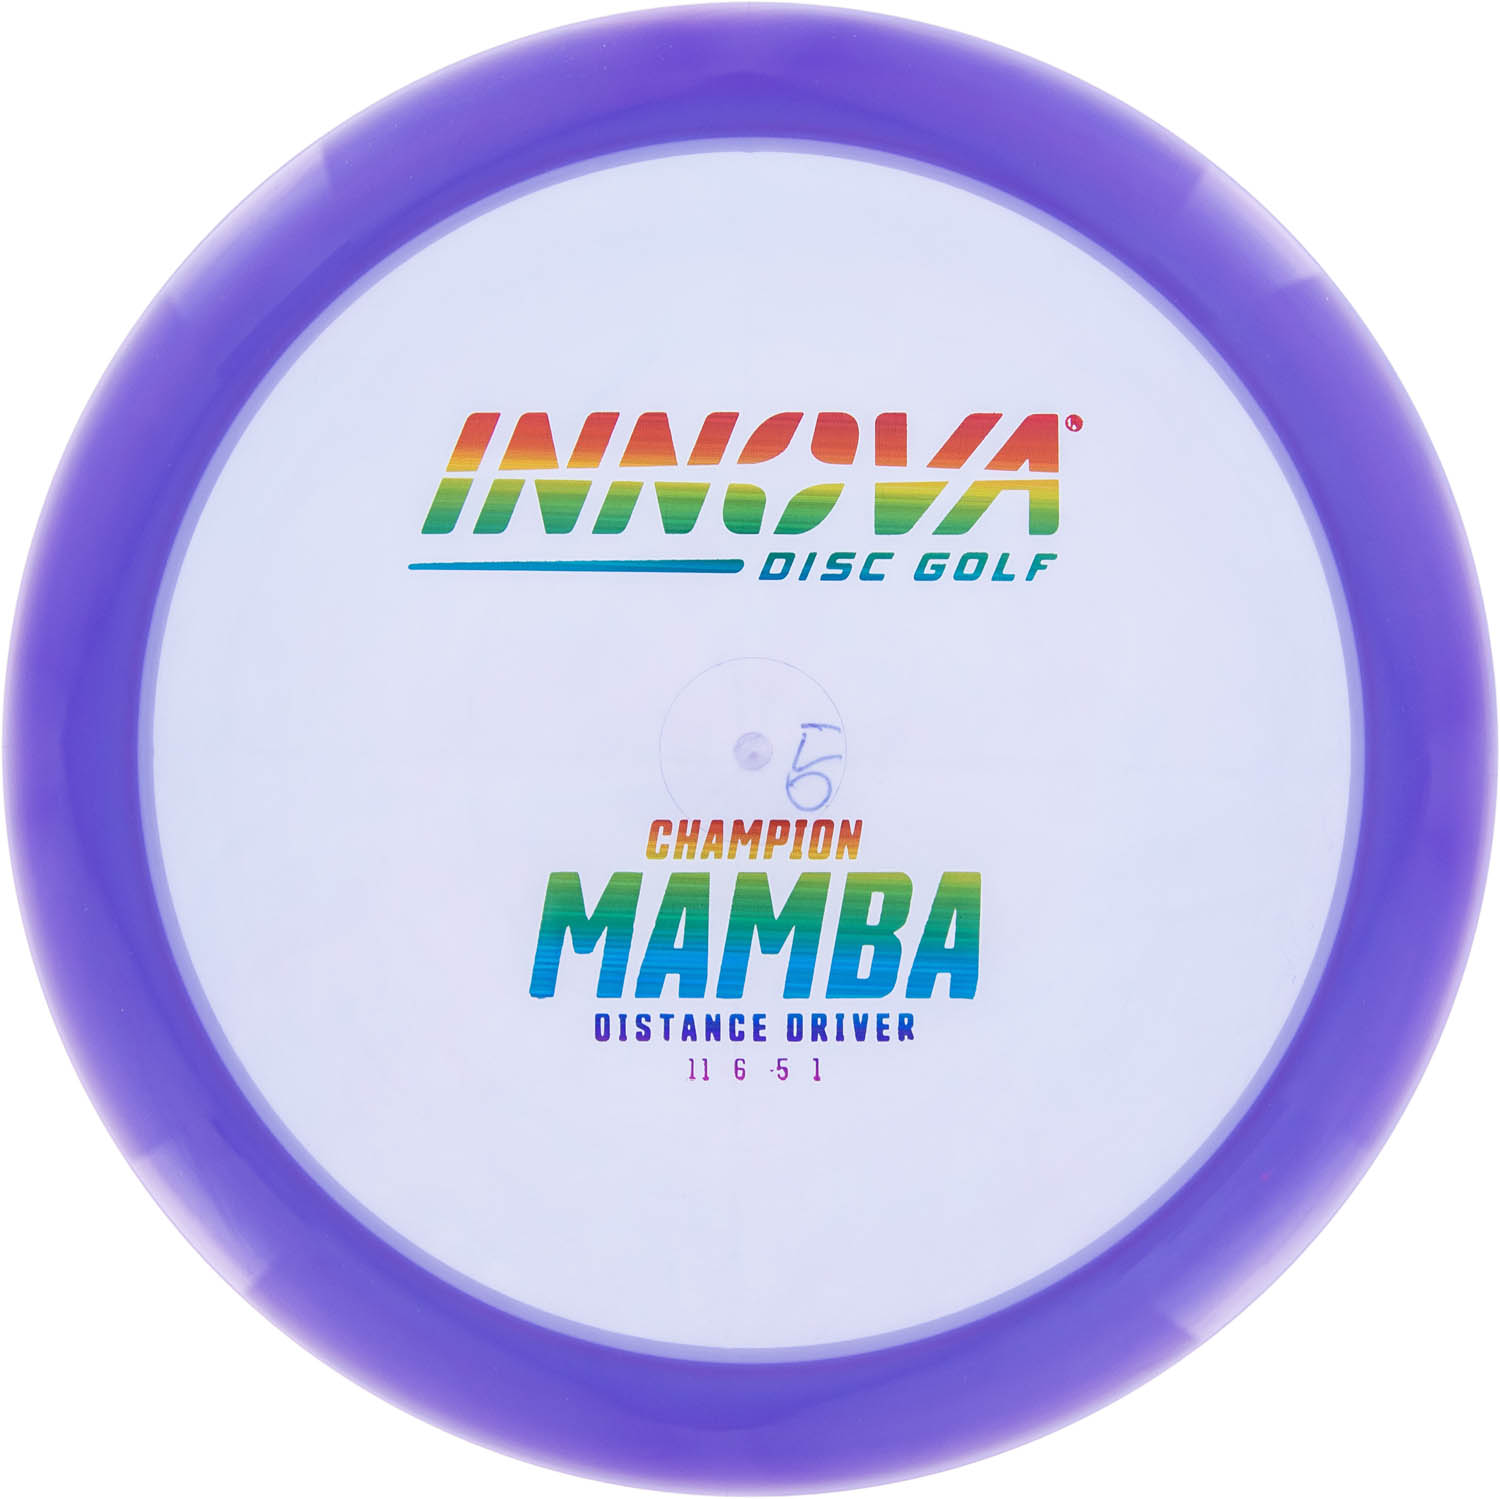 Champion Mamba from Disc Golf United